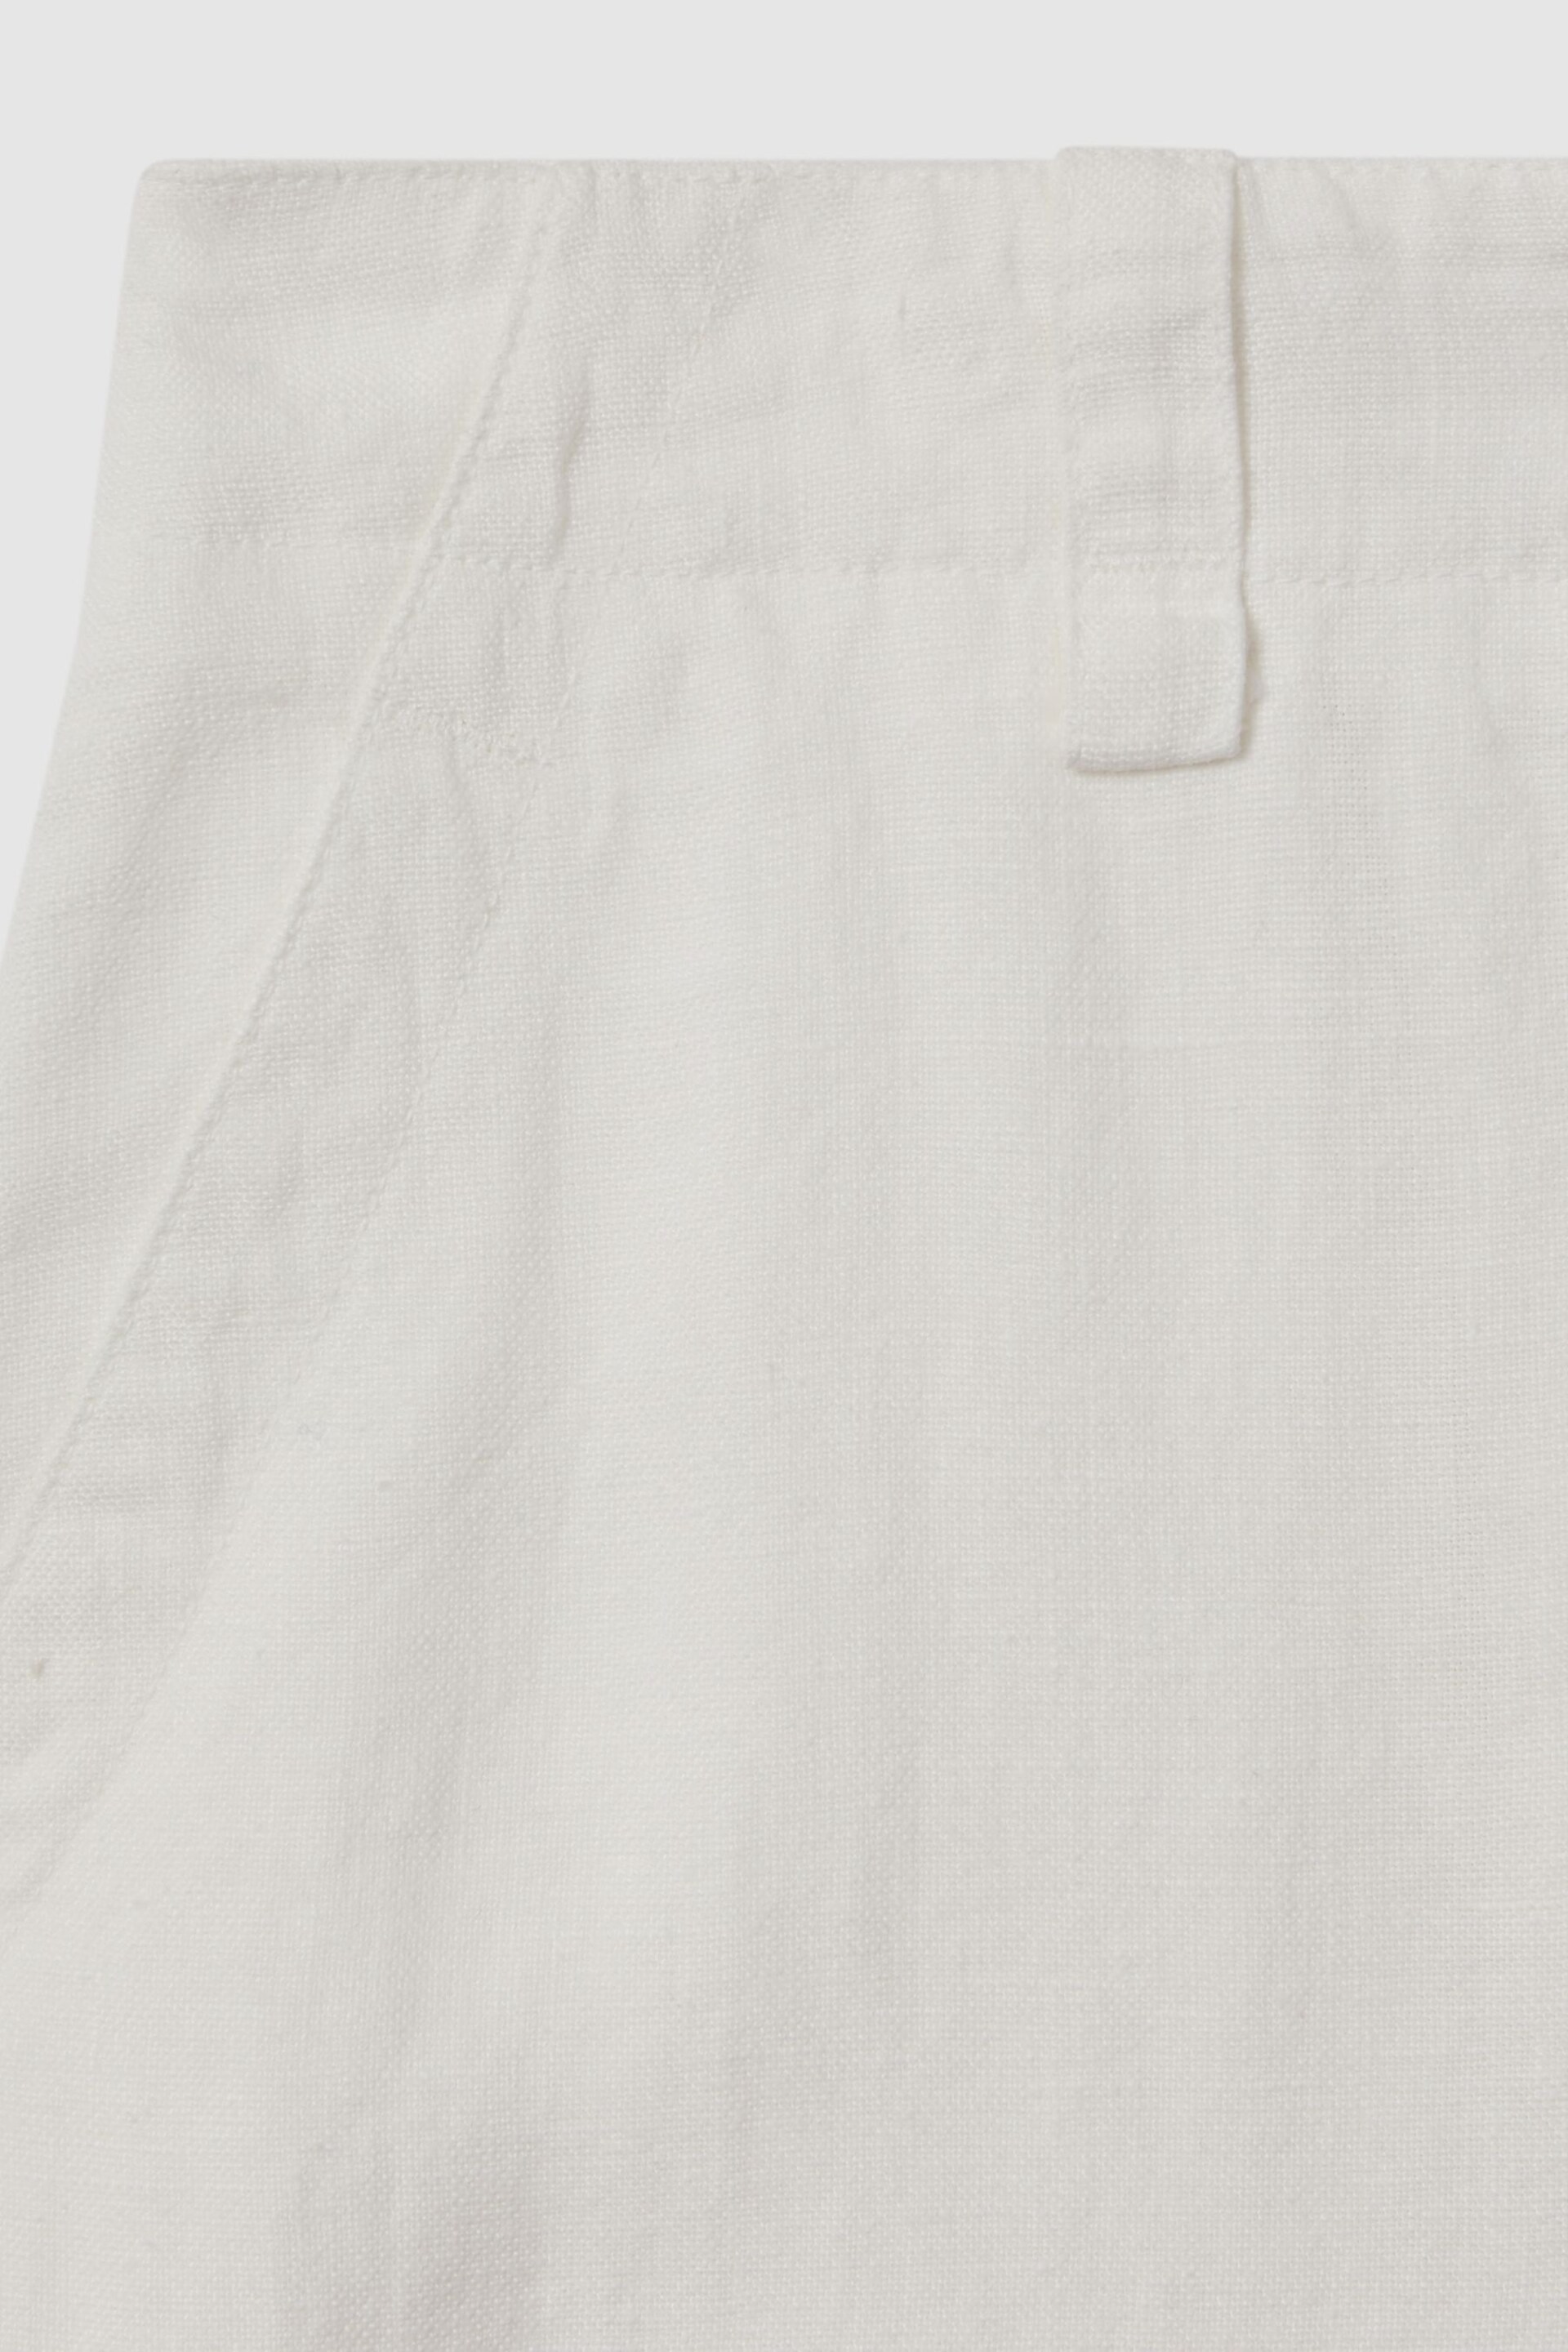 Reiss White Demi Petite Linen Wide Leg Garment Dyed Trousers - Image 5 of 6